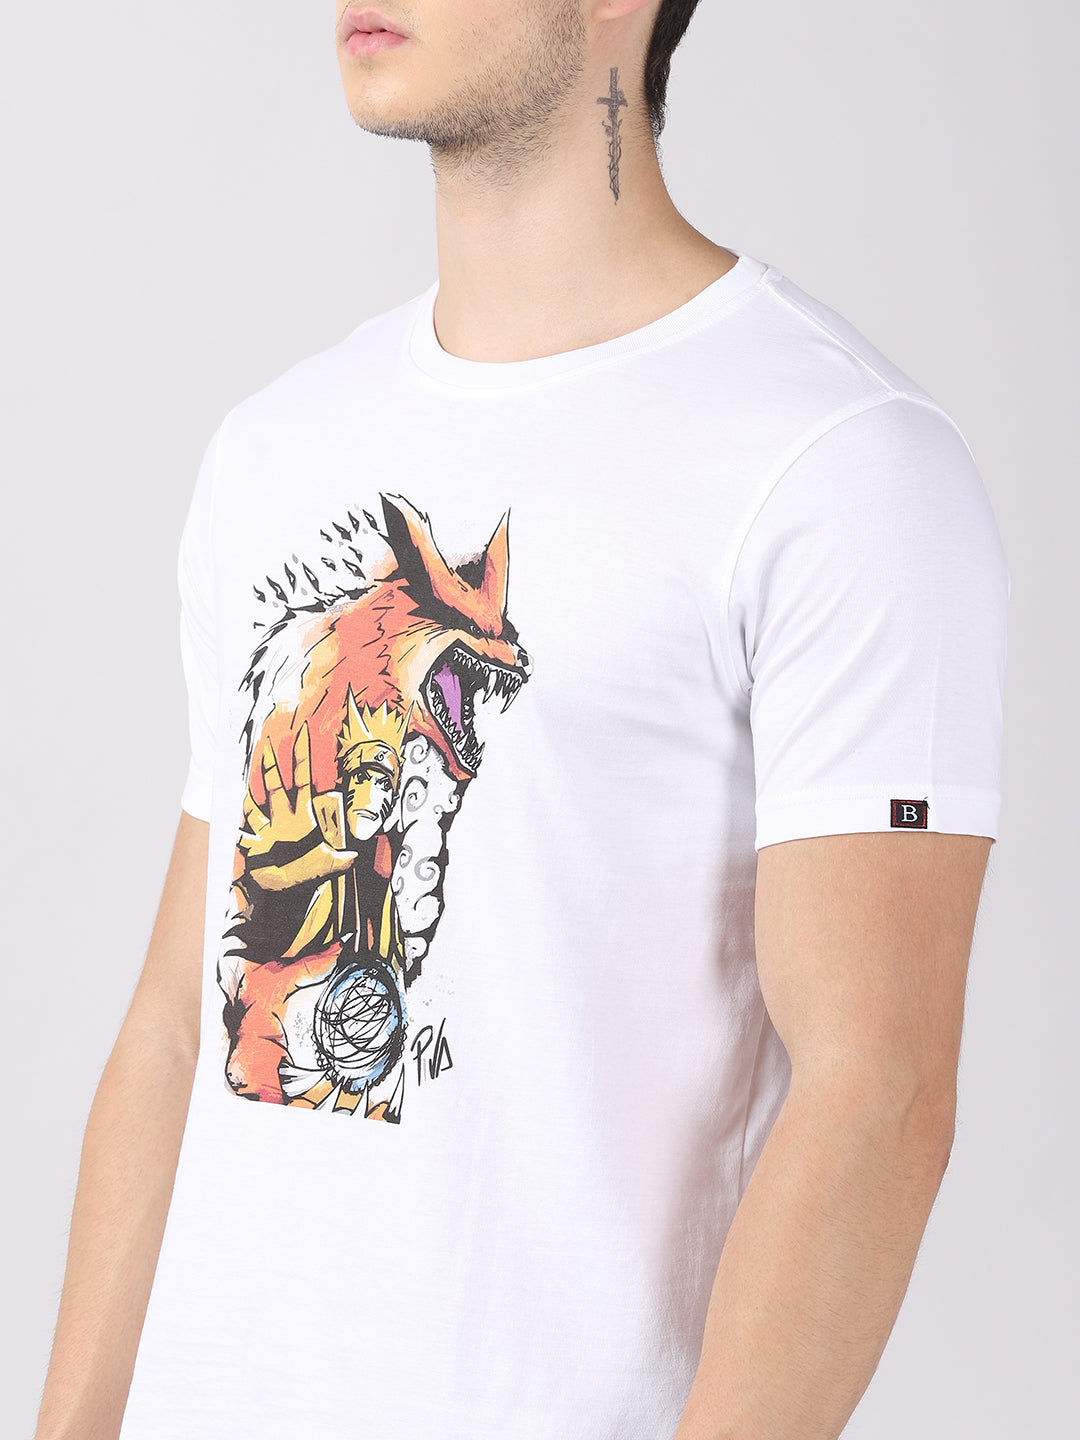 Rasengan with Kyubi - Naruto Anime T-Shirt Graphic T-Shirts Bushirt   